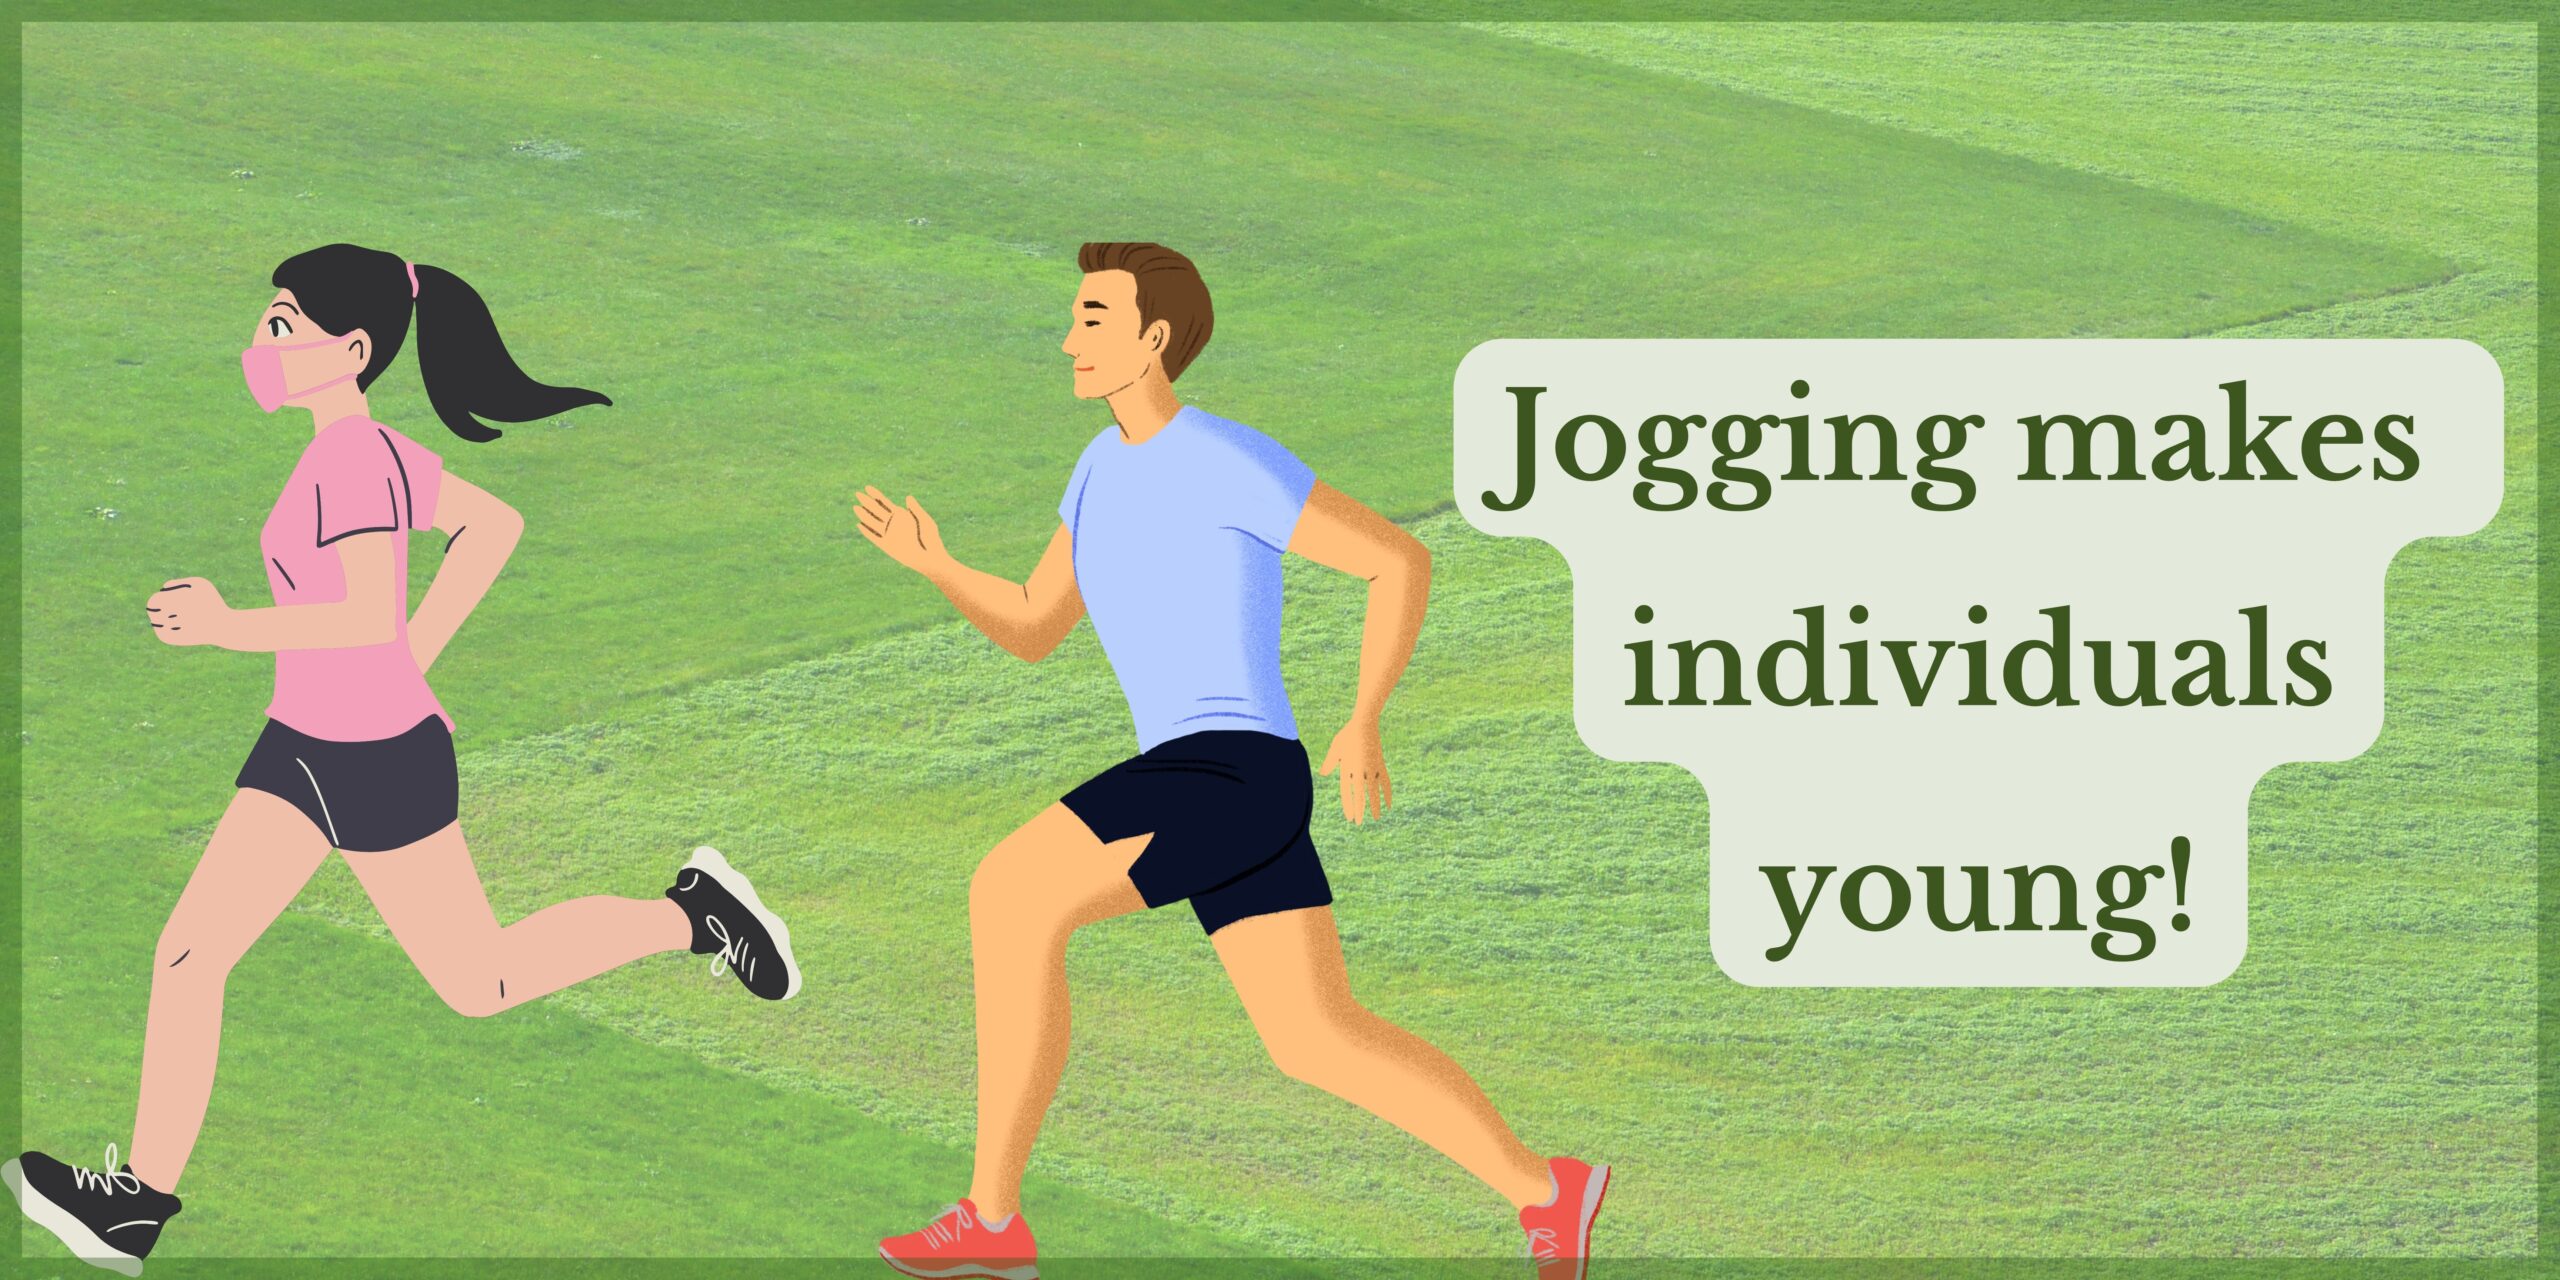 Jogging makes individuals young!